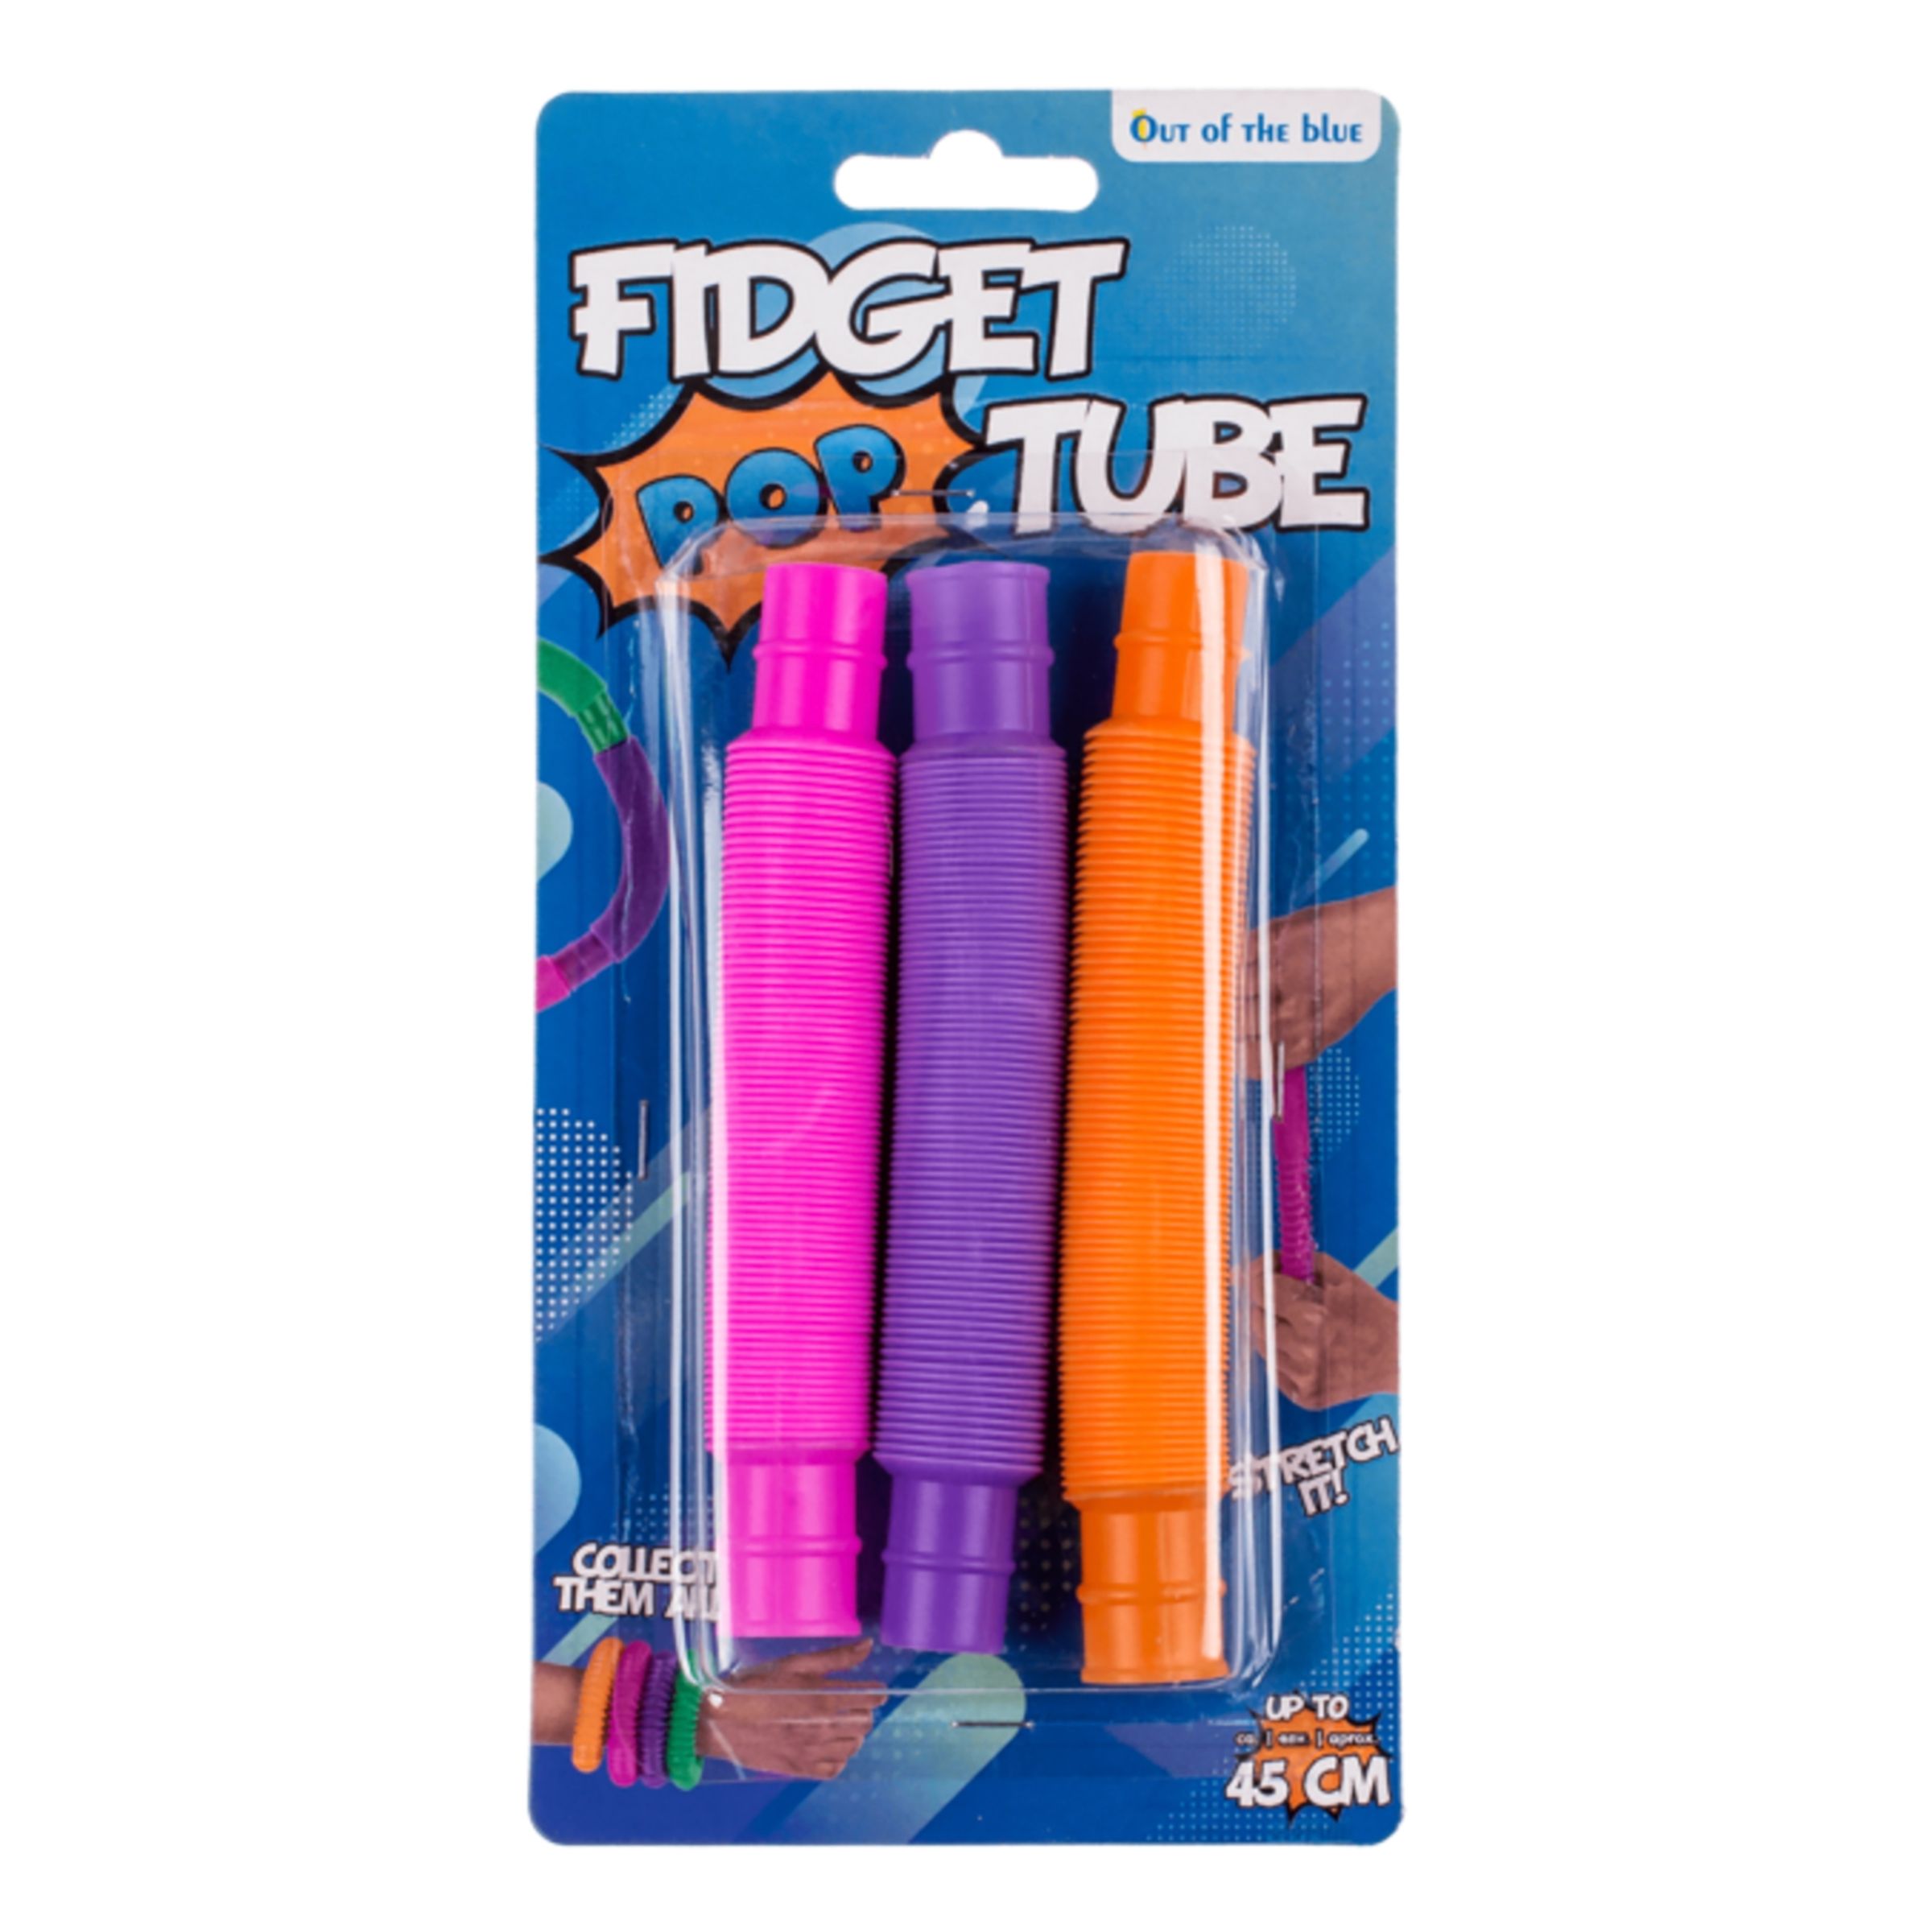 Pop Tube Fidget Toy - 3-pack